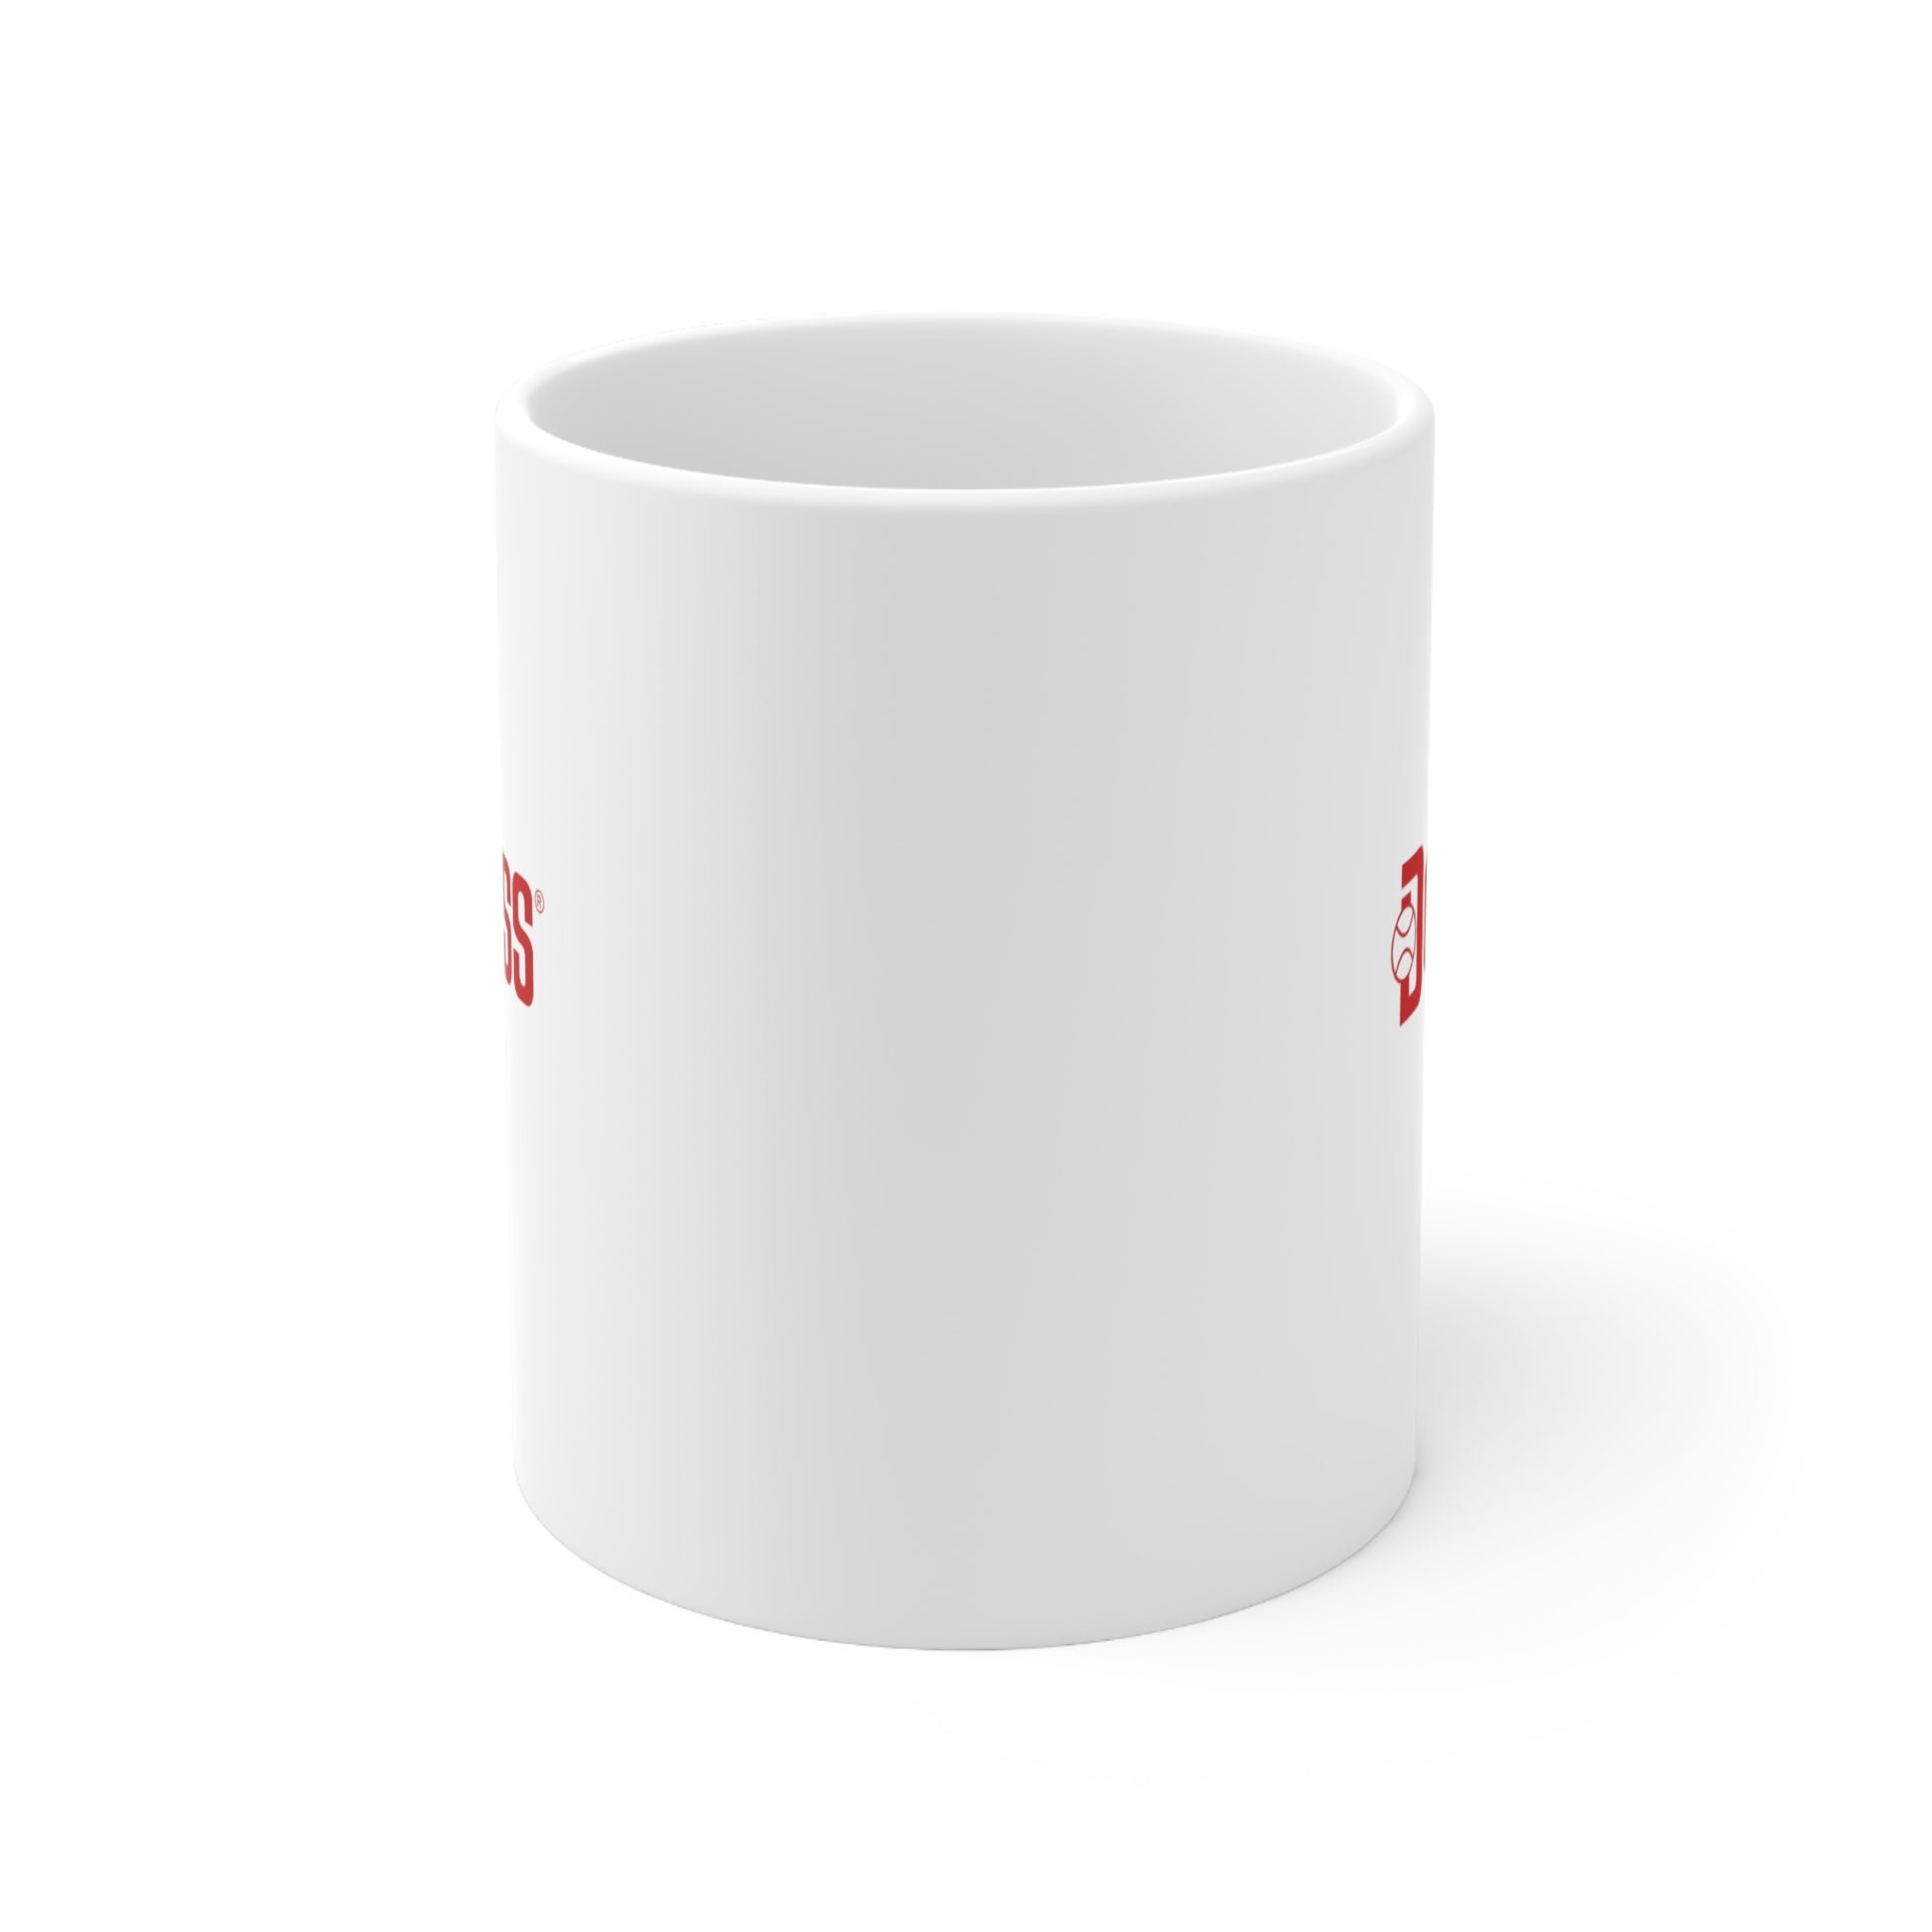 Donruss Ceramic Mug